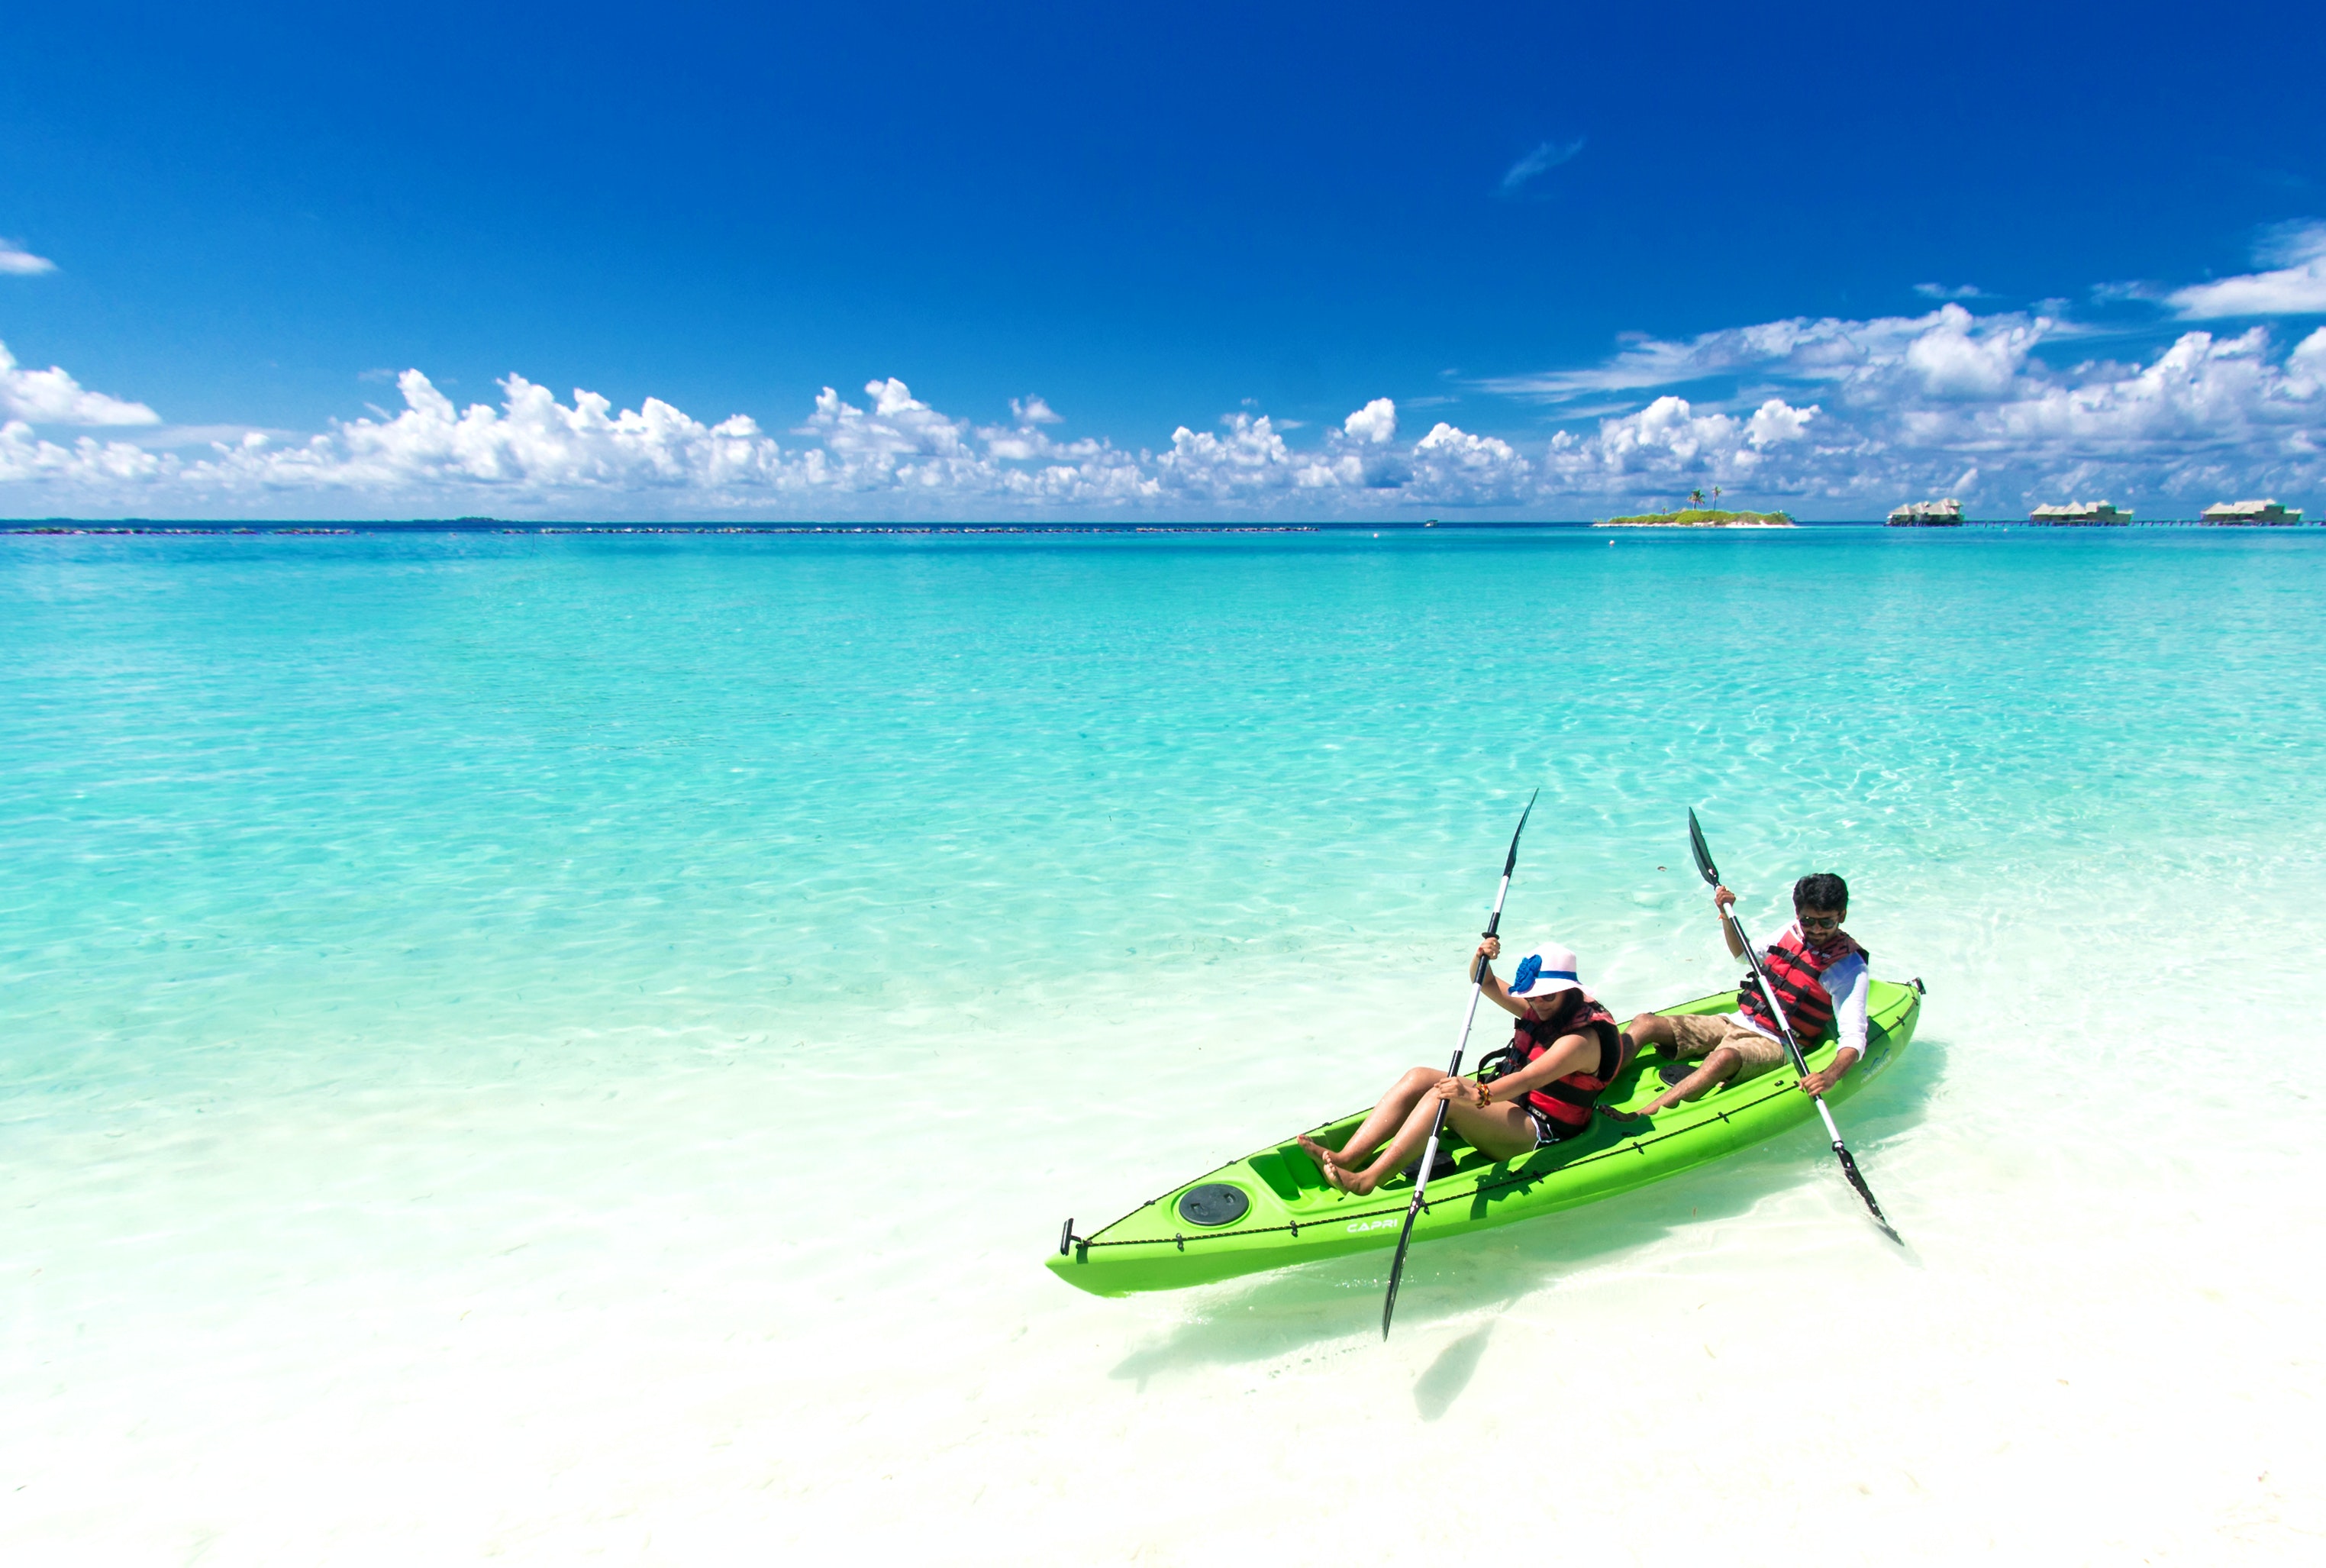 Maldivas water villa resorts